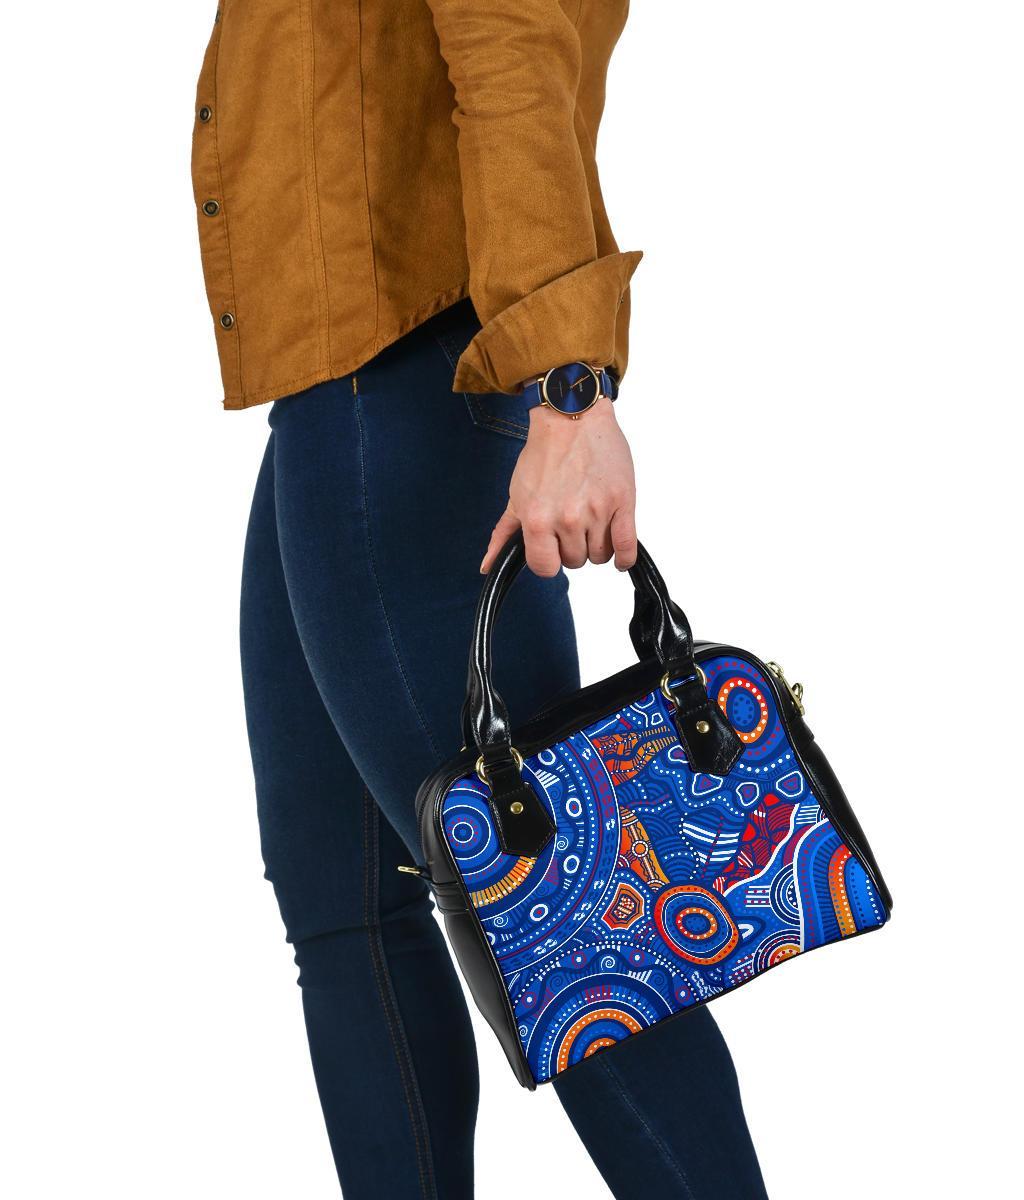 aboriginal-shoulder-handbags-indigenous-footprint-patterns-blue-color